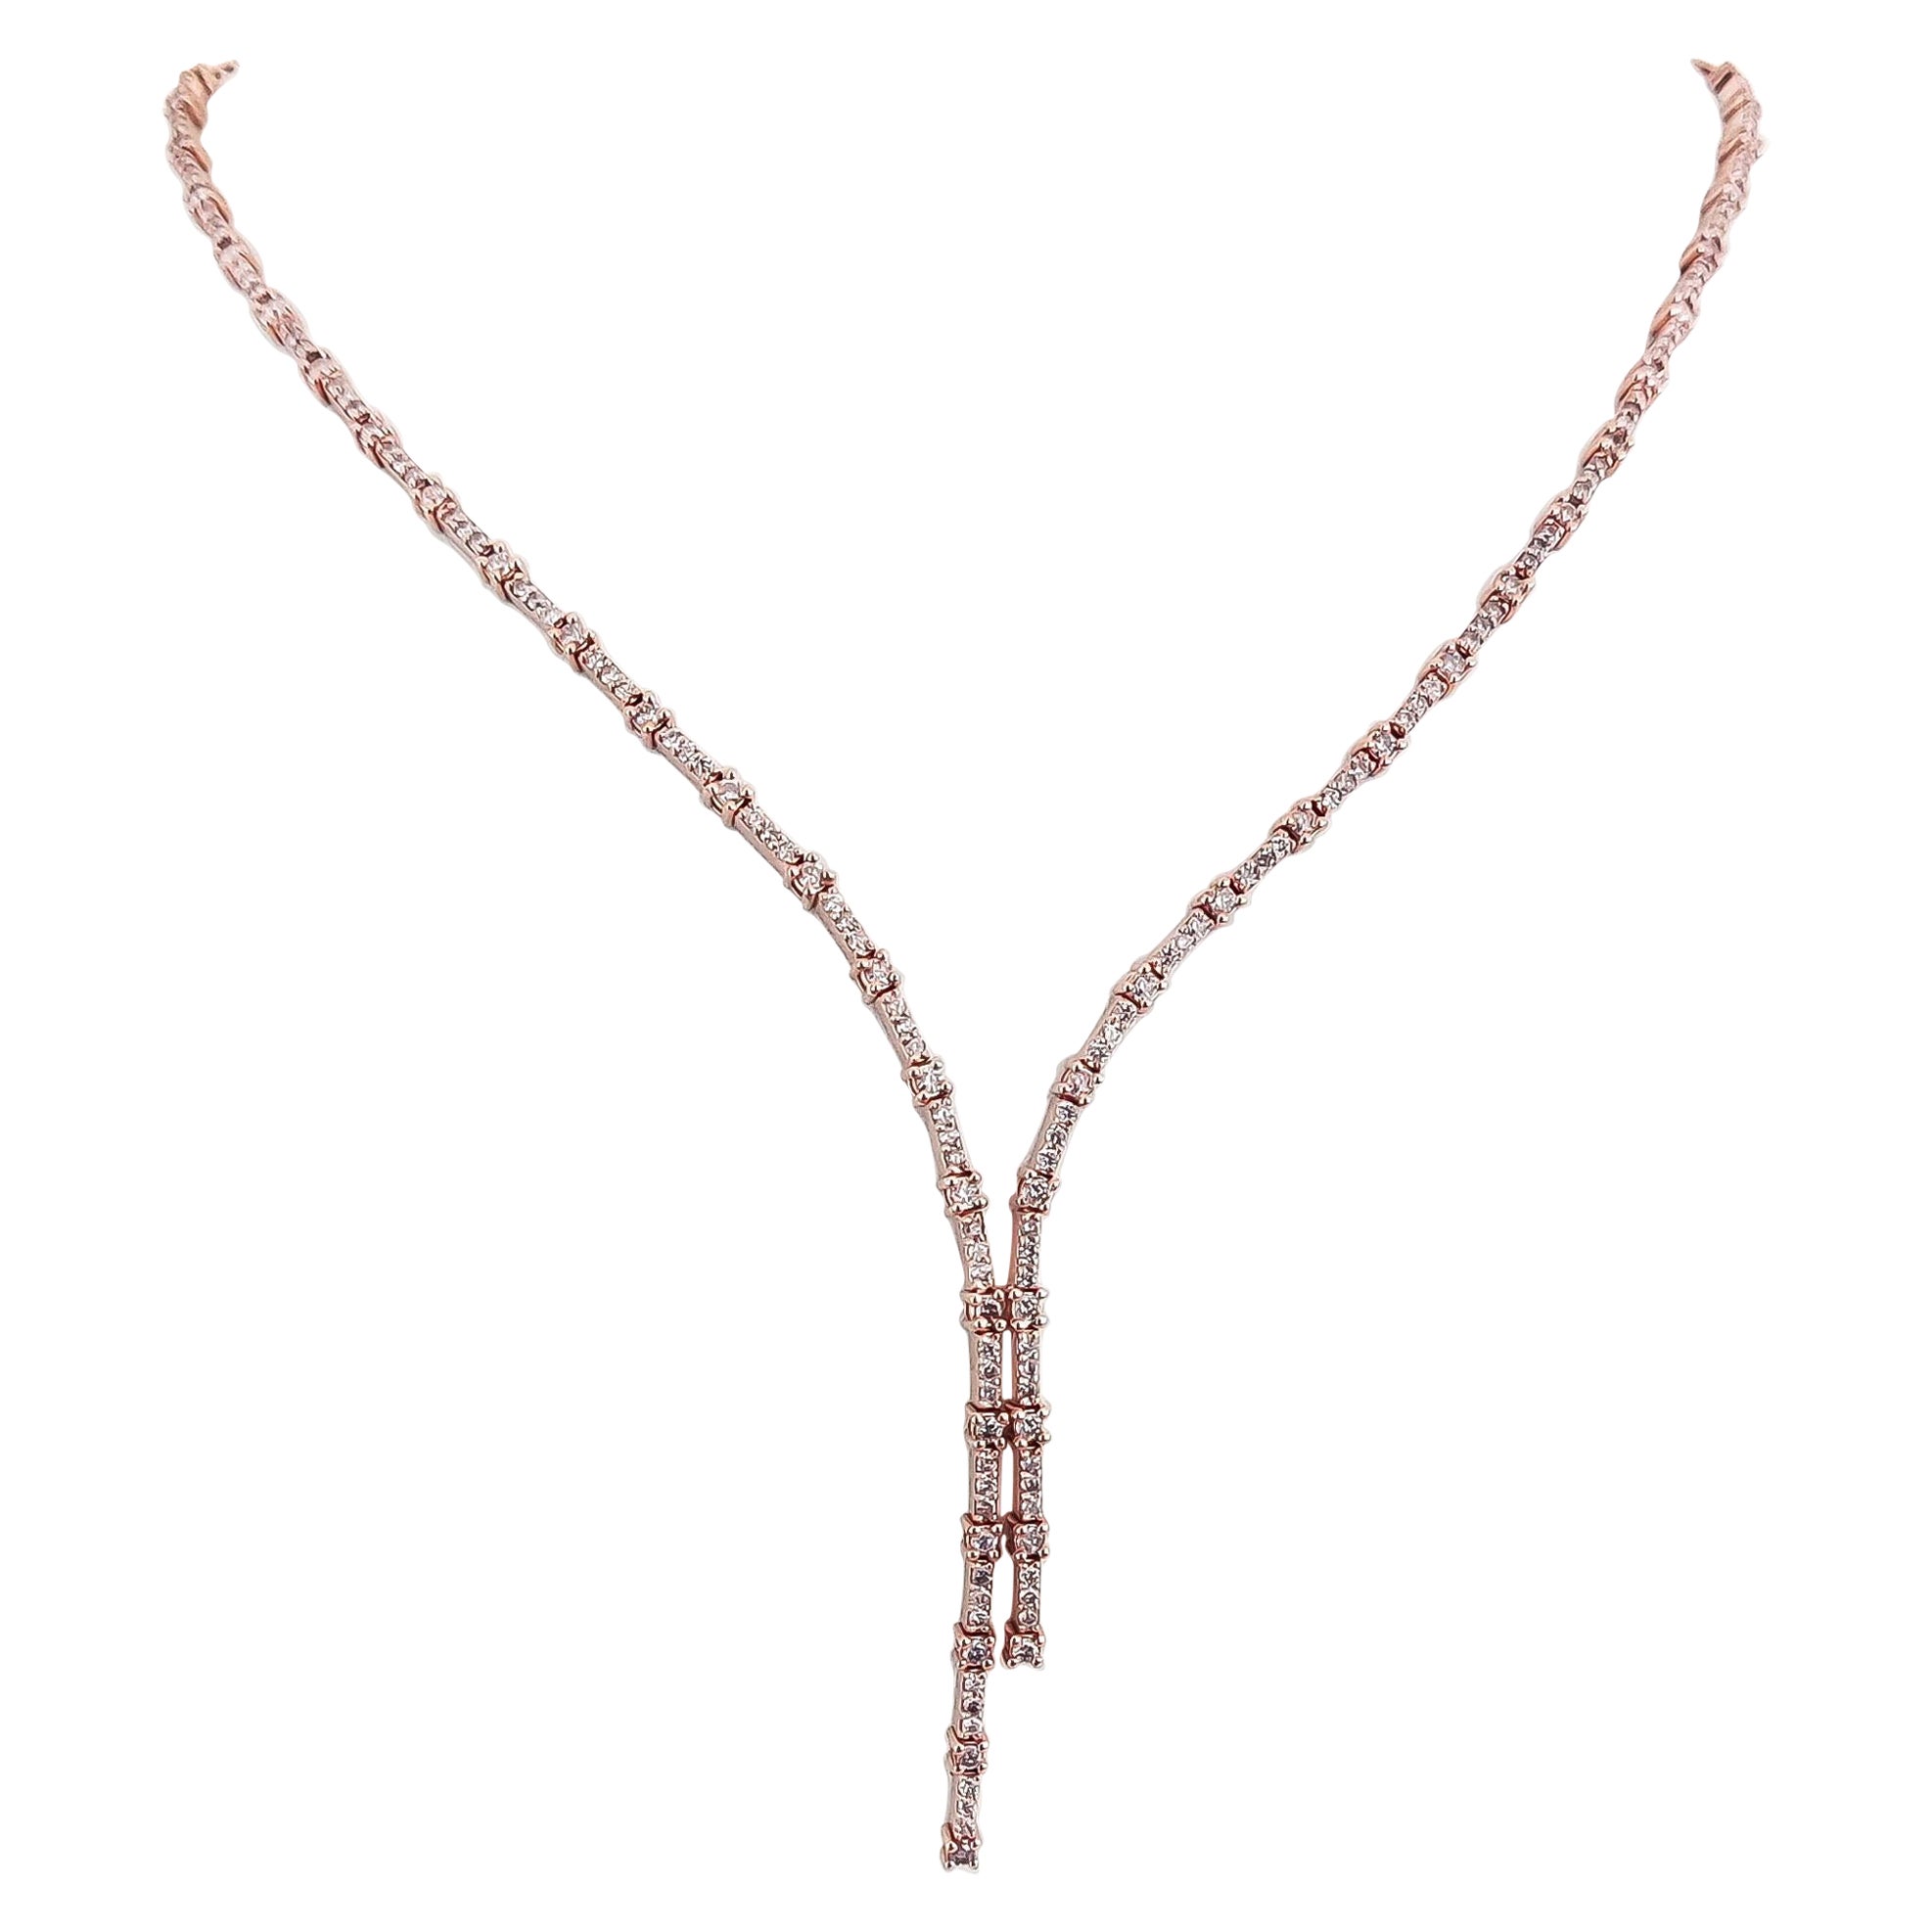 NO RESERVE 2.30 Carat Round Brilliant Pink Diamond Necklace 14k Rose Gold